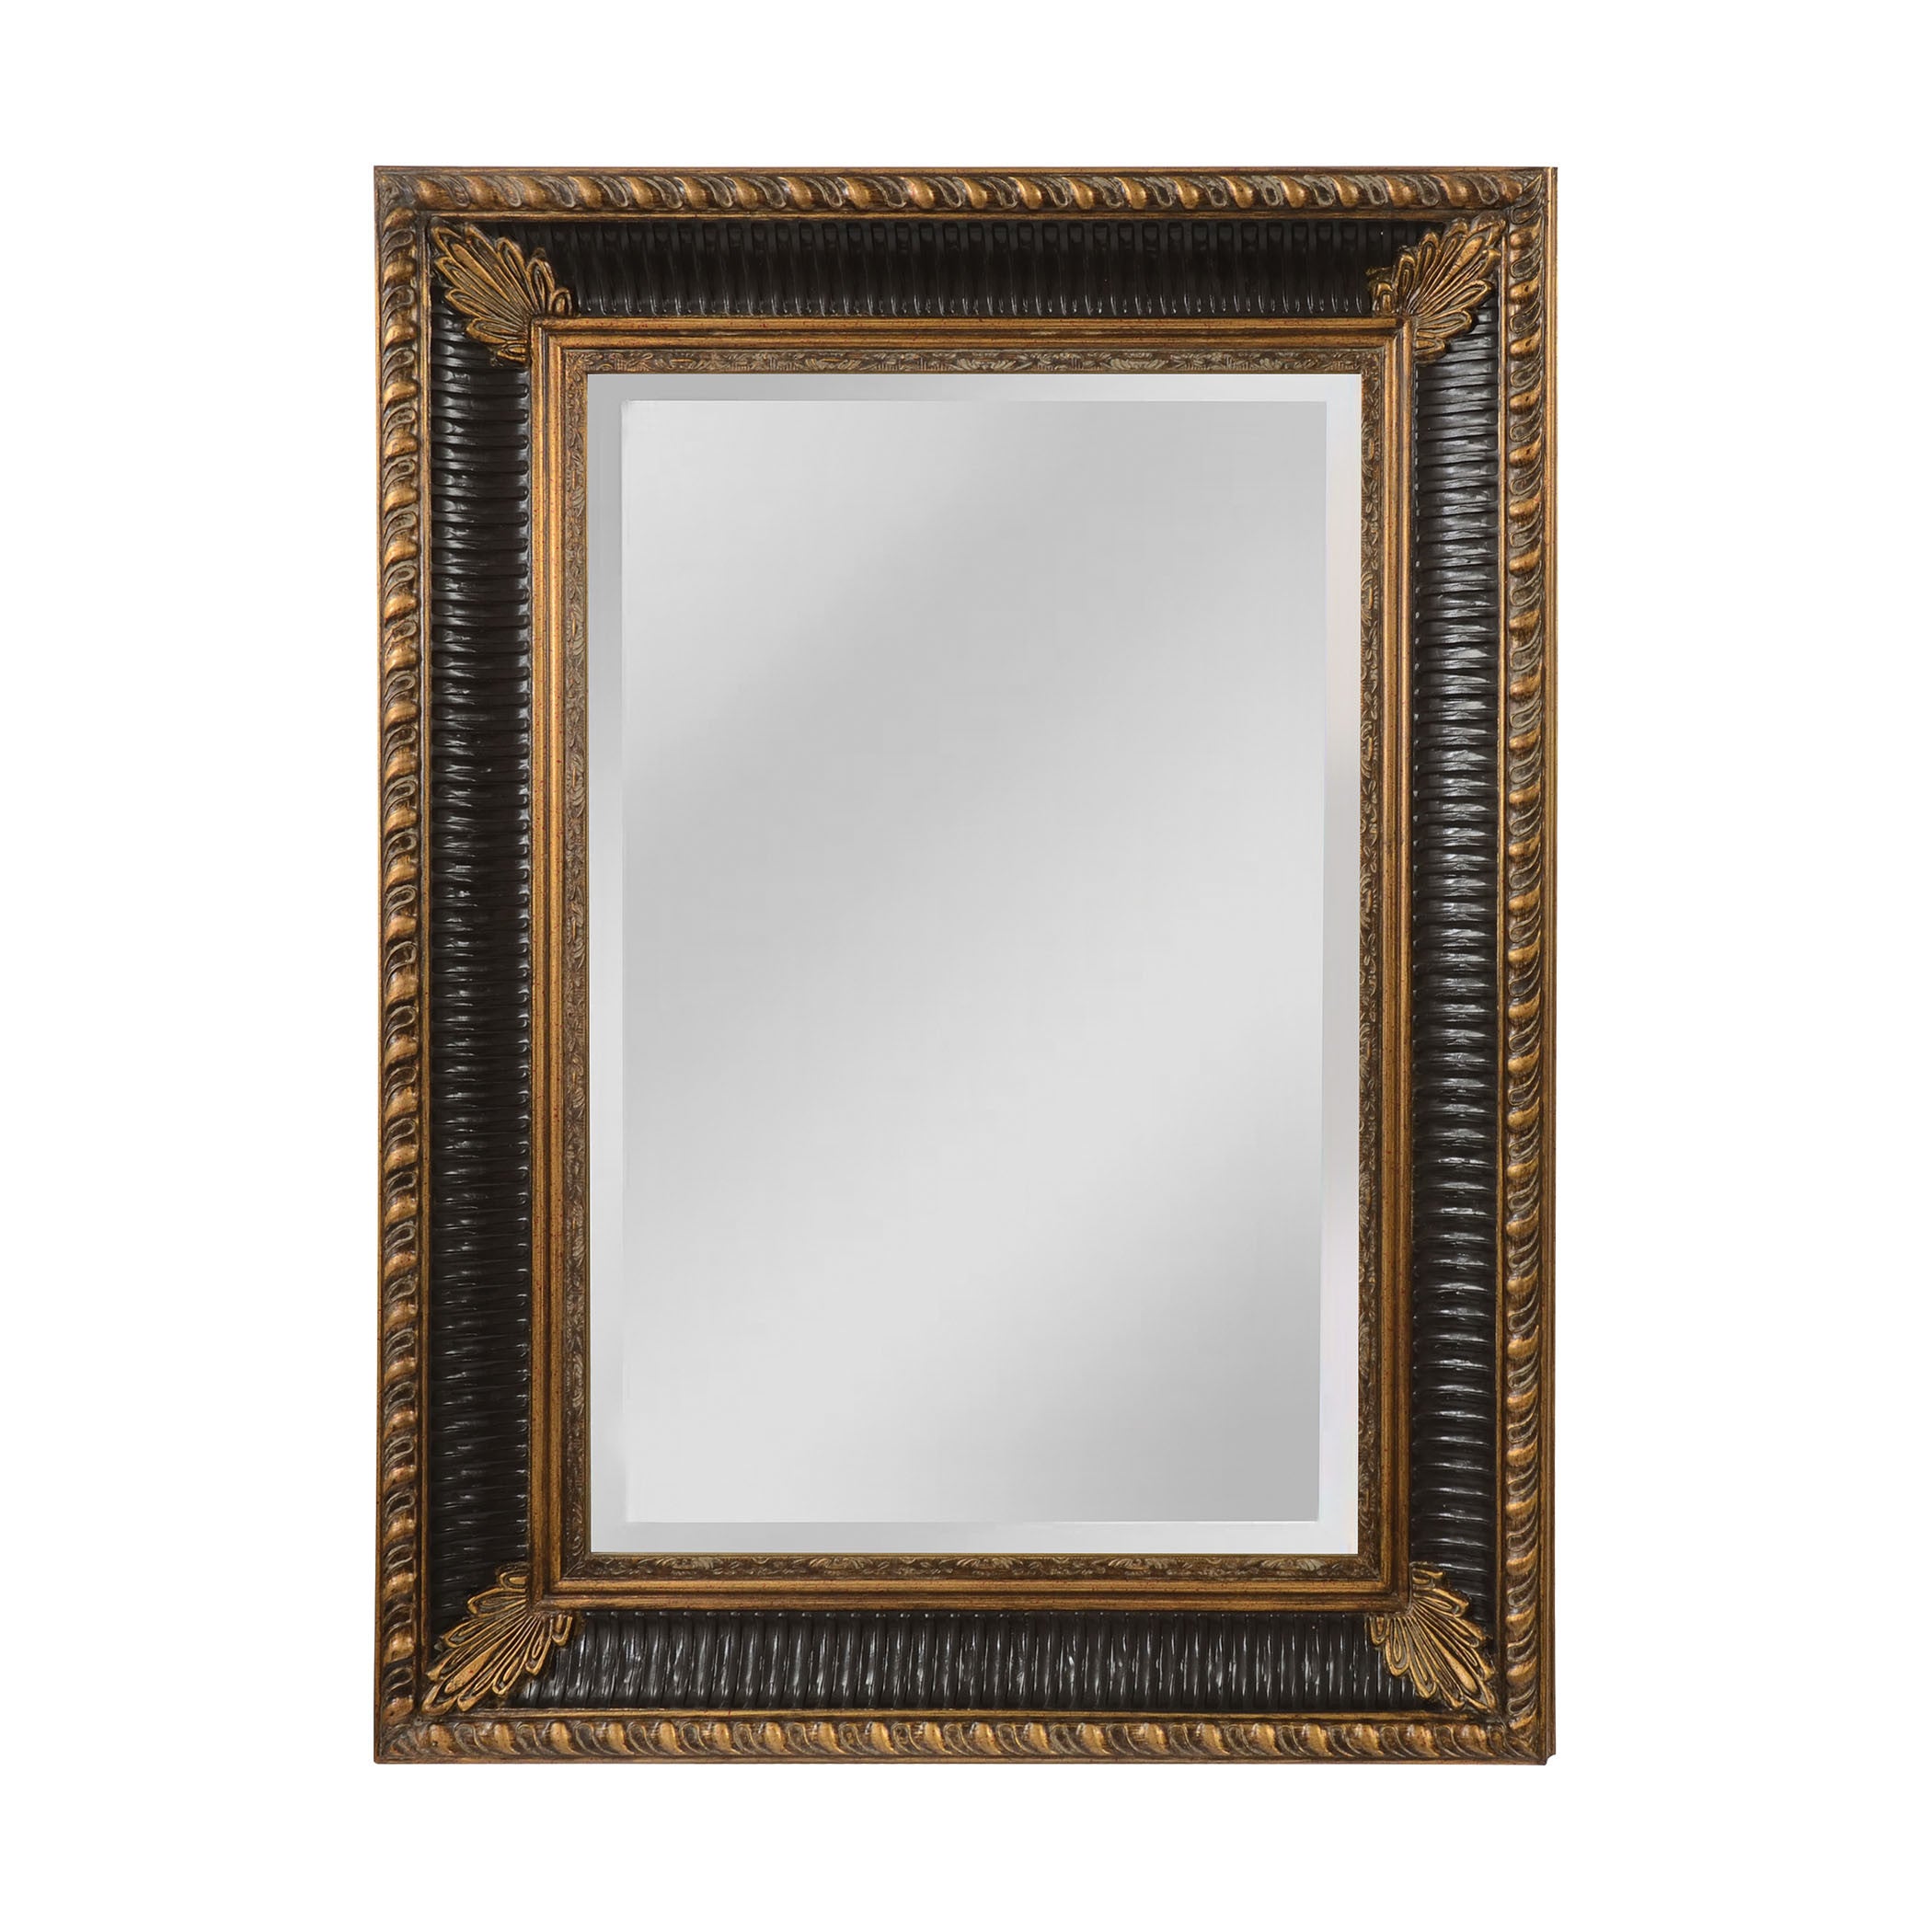 Mirror Masters Mw5600a-0070 Colebrook Collection Walnut,ebony Finish Wall Mirror